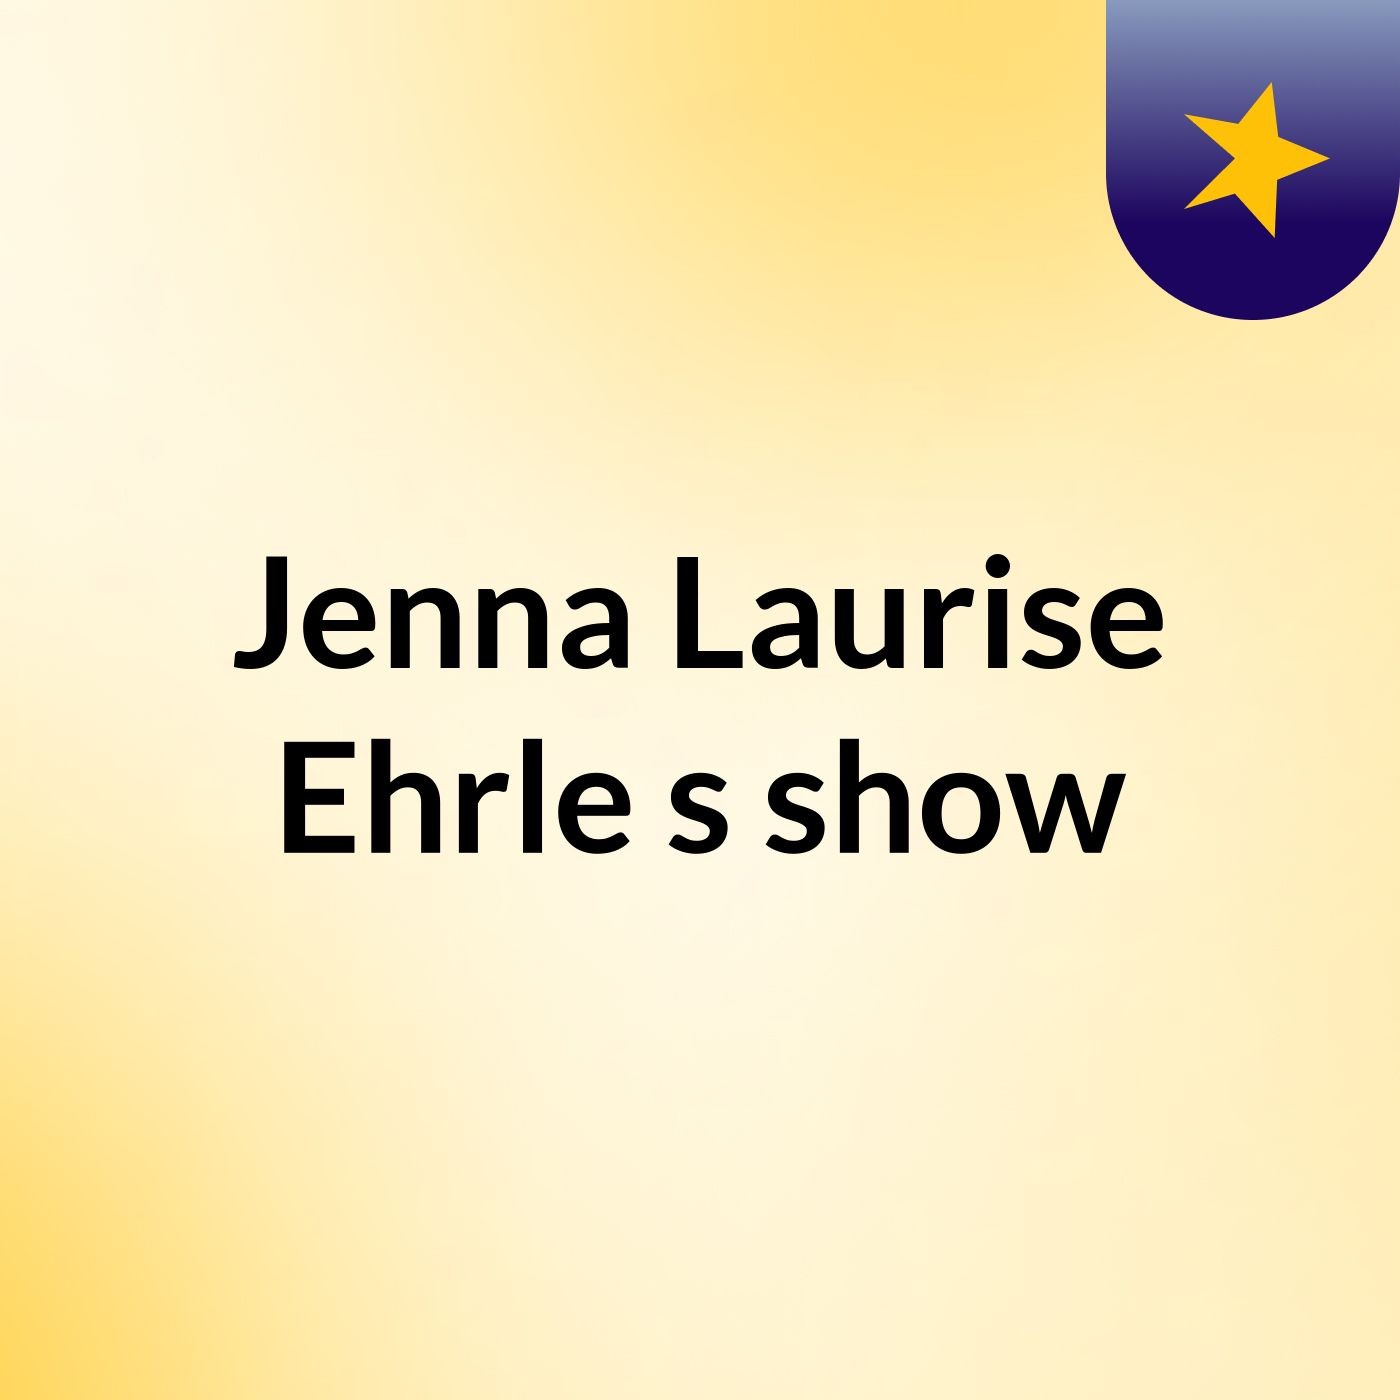 Jenna Laurise Ehrle's show